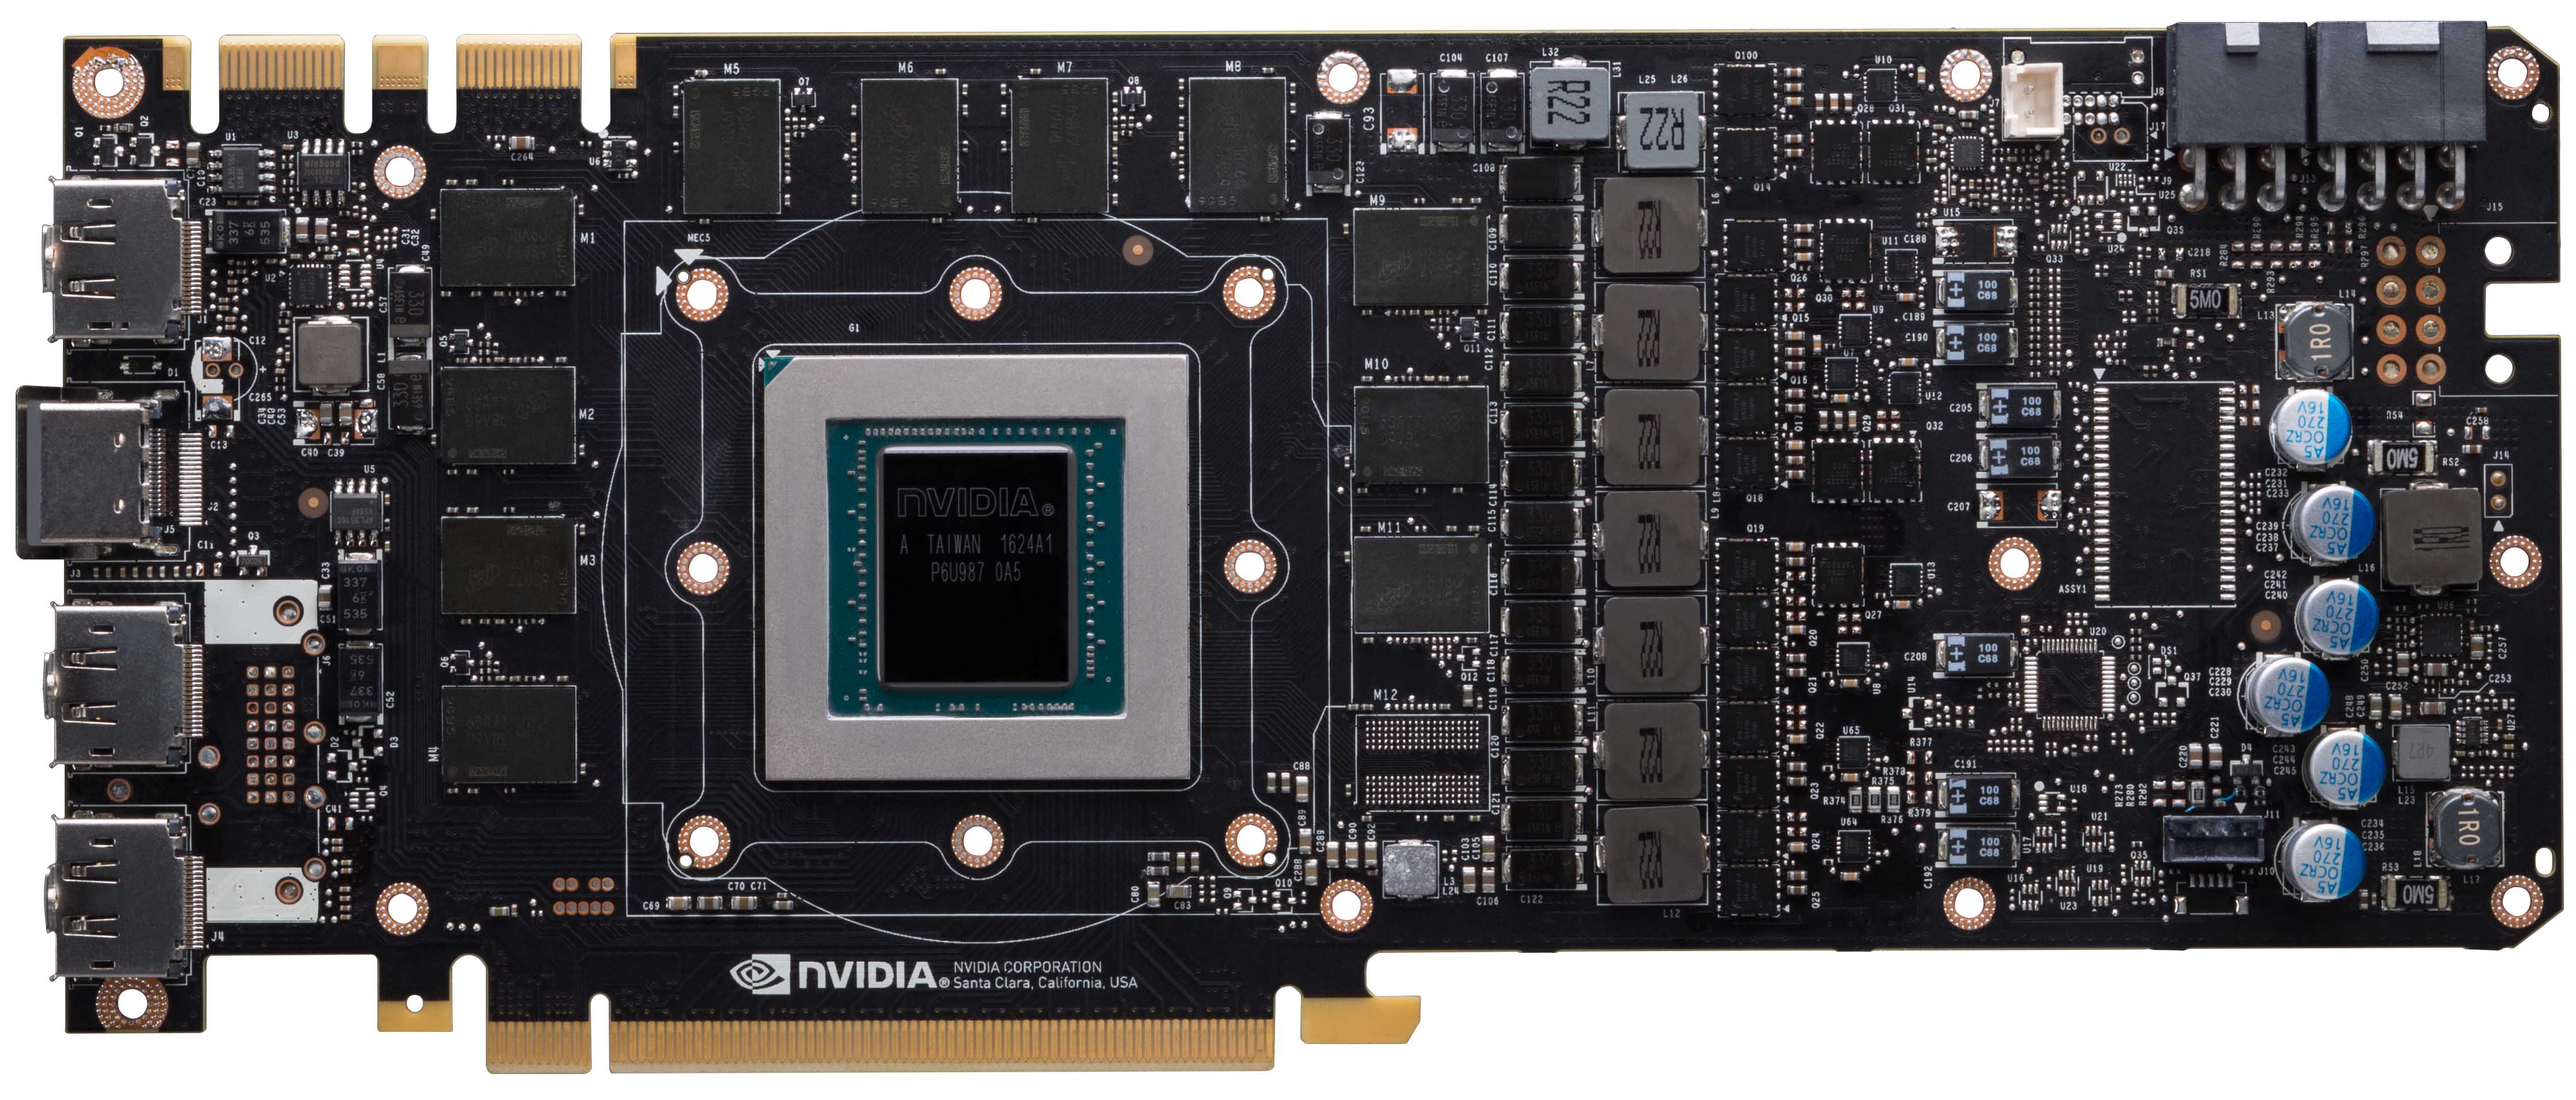 The NVIDIA GeForce GTX 1080 Ti Founder 